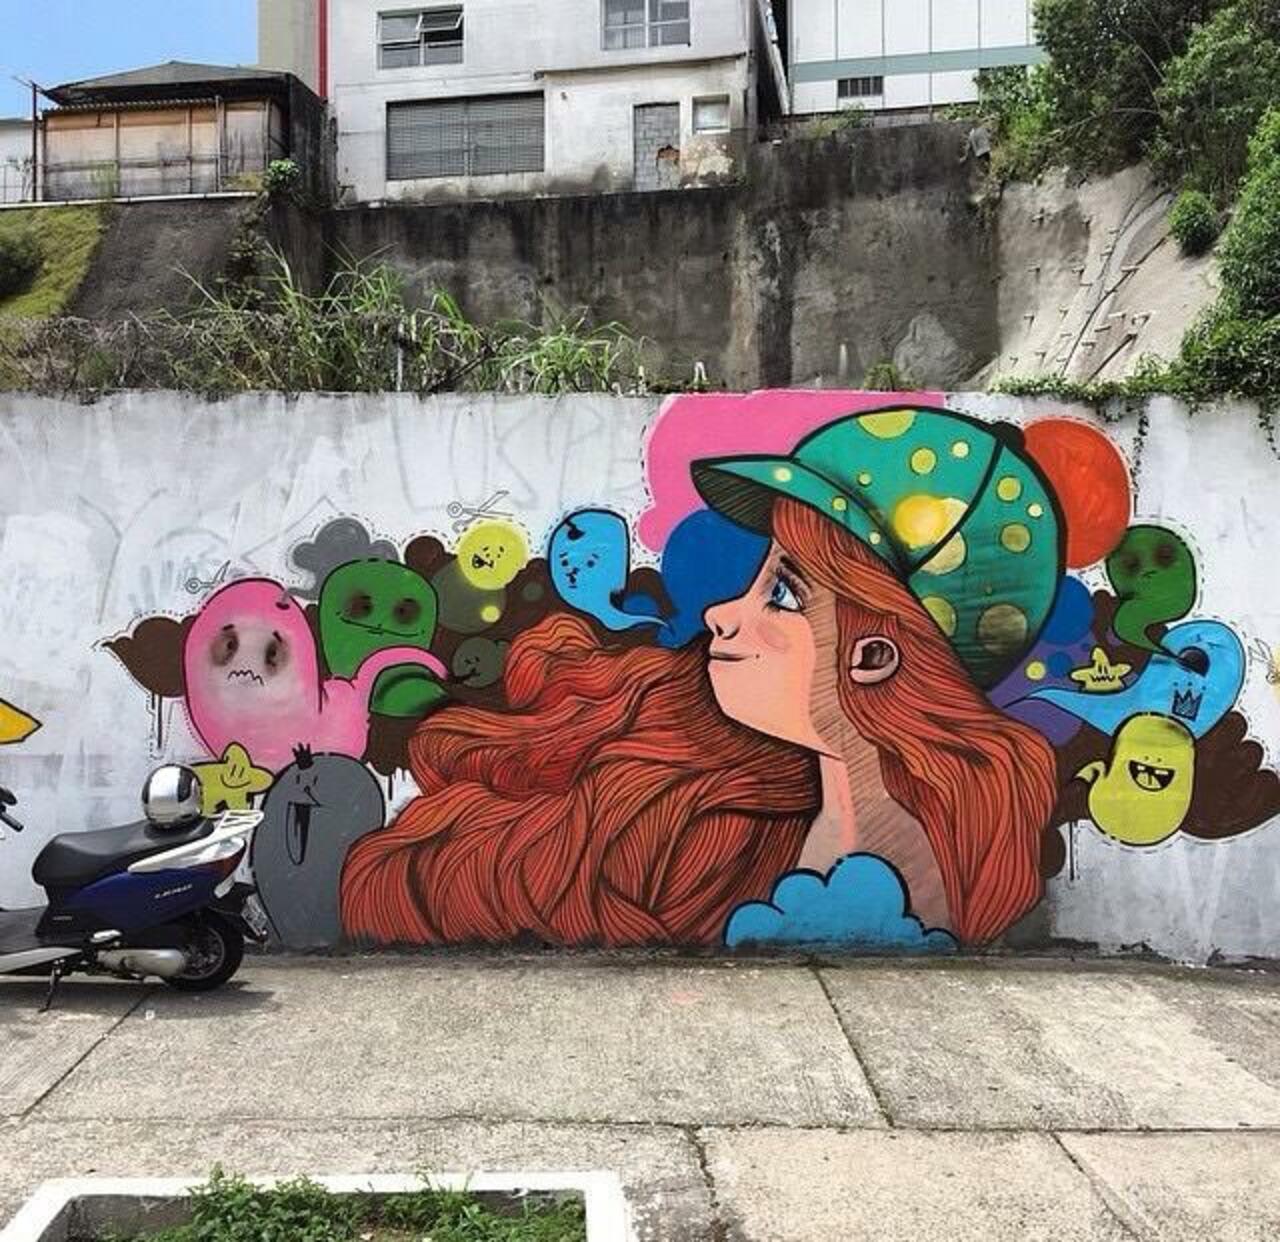 Sistemas4s: Endearing Street Art by Vupulos in São Paulo, Brazil 

#art #mural #graffiti #streetart http://t.co/bZ4u7EWOwP